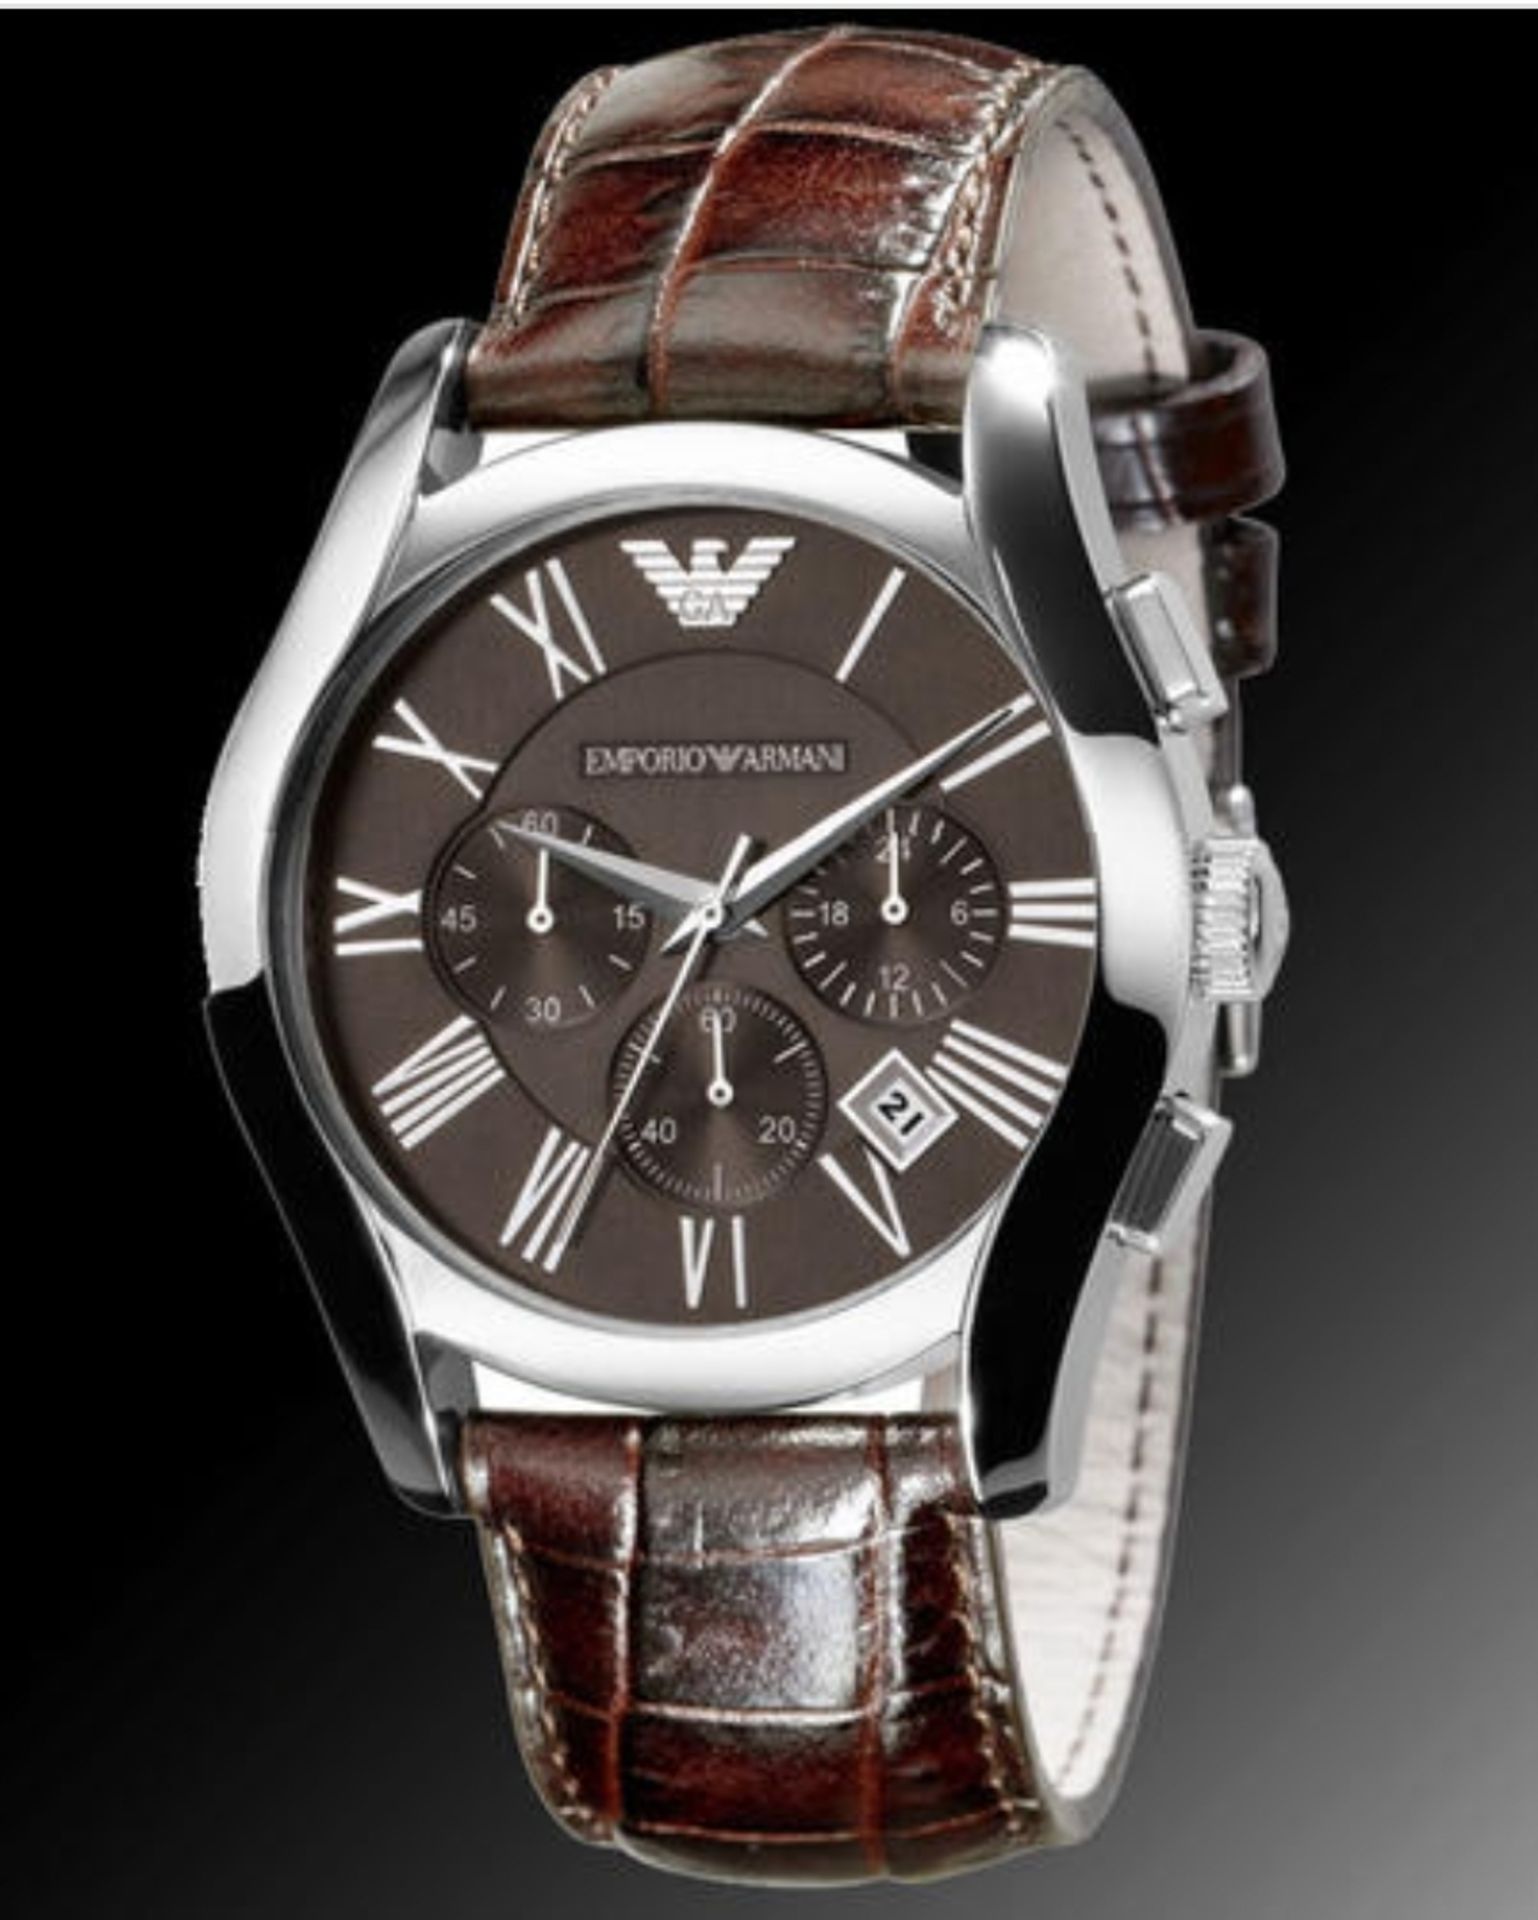 Emporio Armani AR0671 Men's Brown Leather Strap Quartz Chronograph Watch - Image 4 of 6